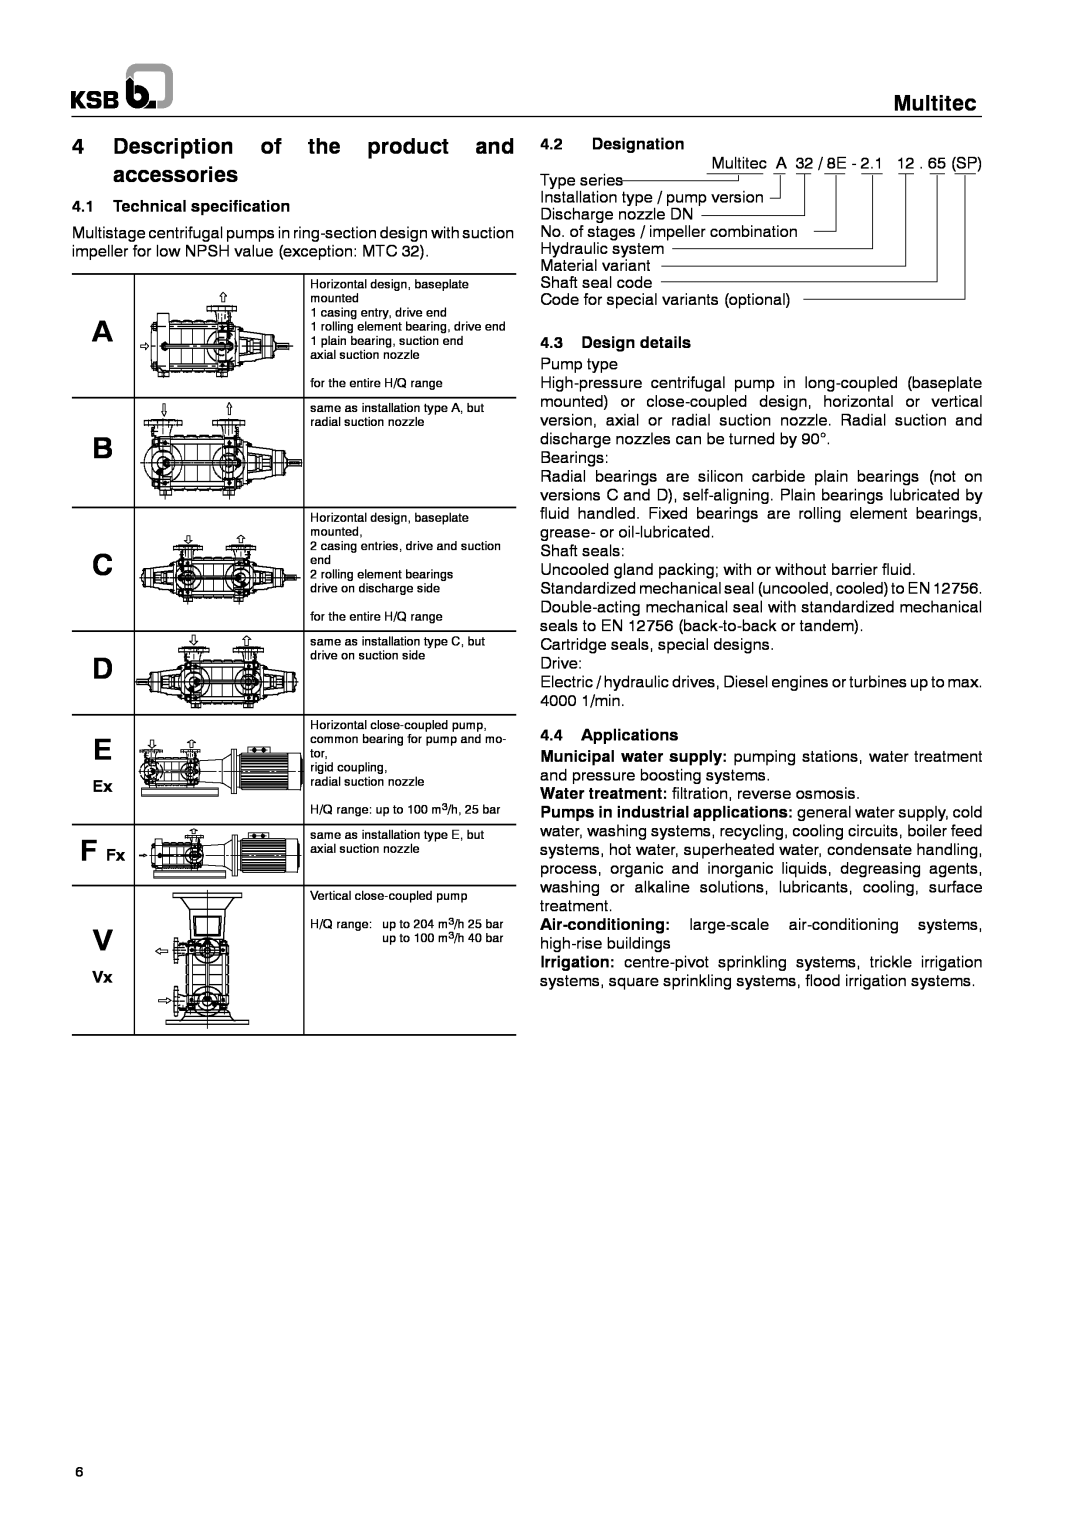 Multitech 1777.8/7-10 G3 operating instructions Description, product, accessories, F Fx, Multitec 